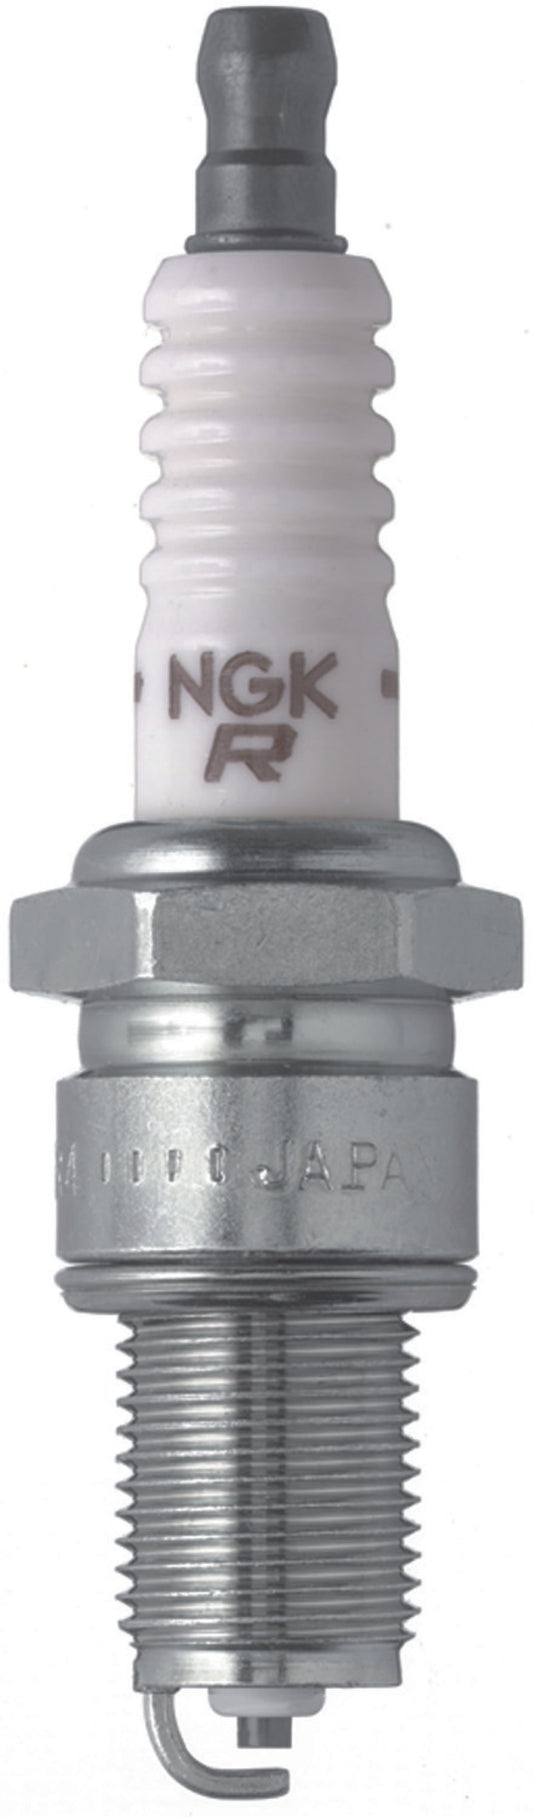 NGK V-Power Spark Plug Box of 4 (GR45)